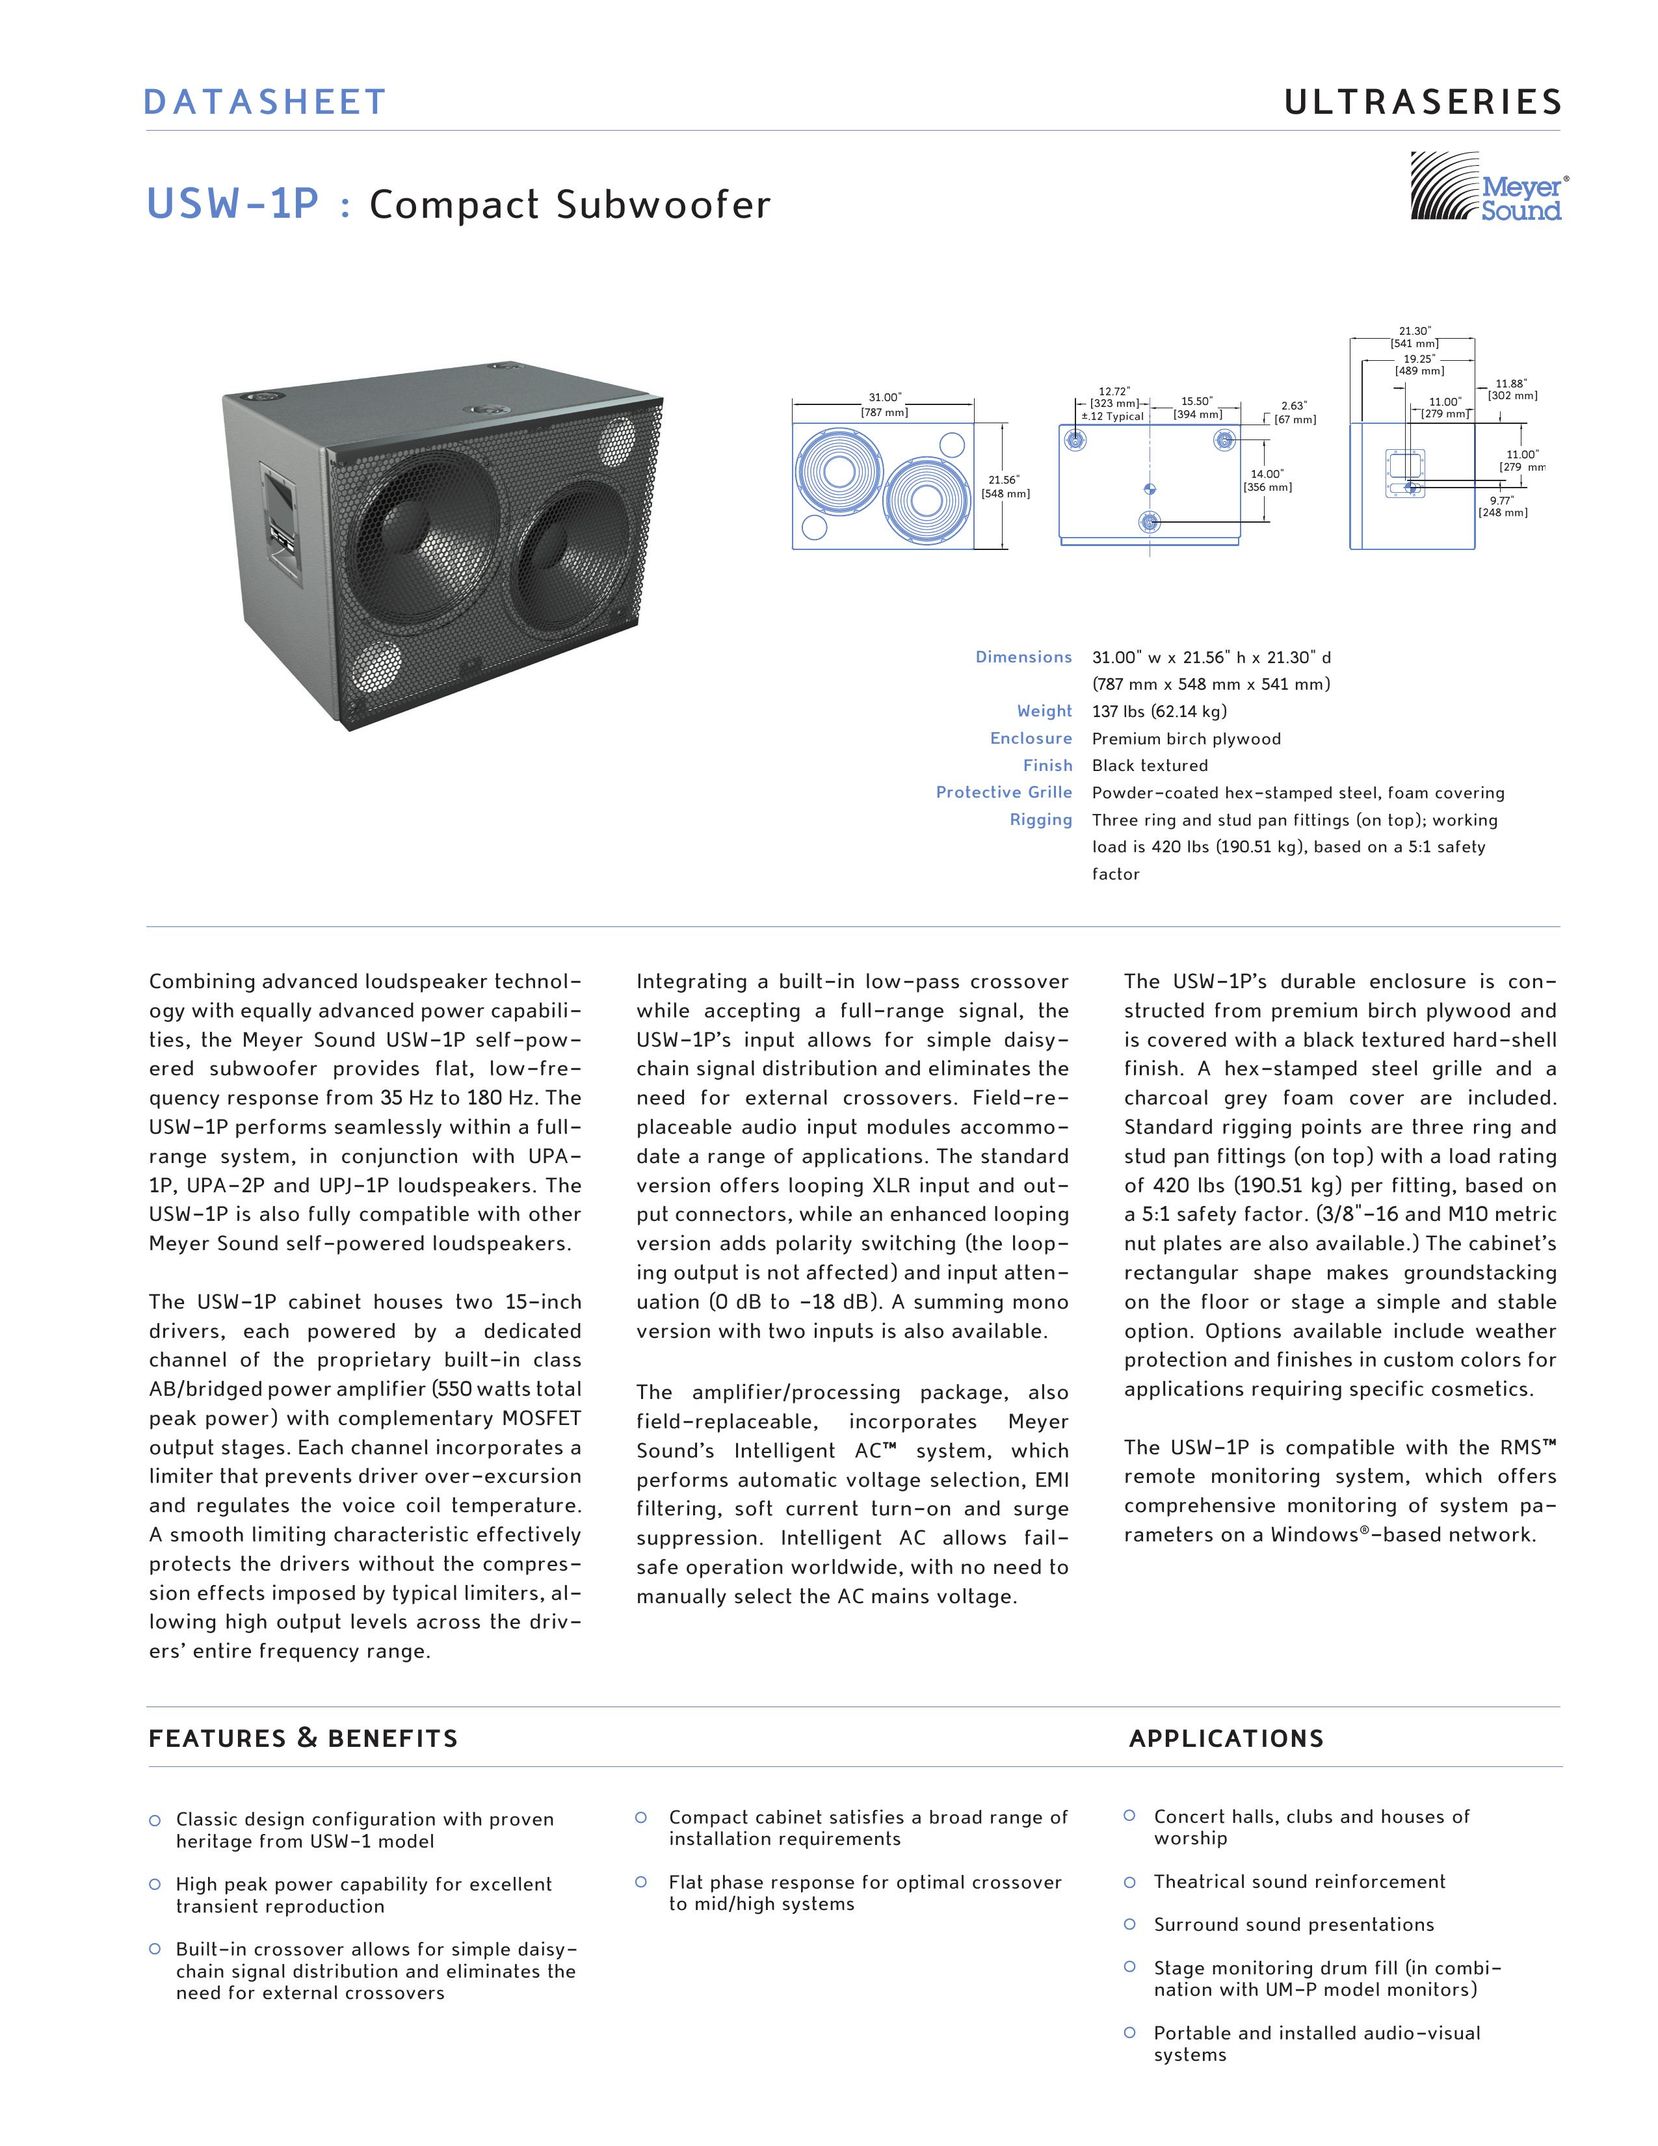 Meyer Sound USW-1P Speaker User Manual